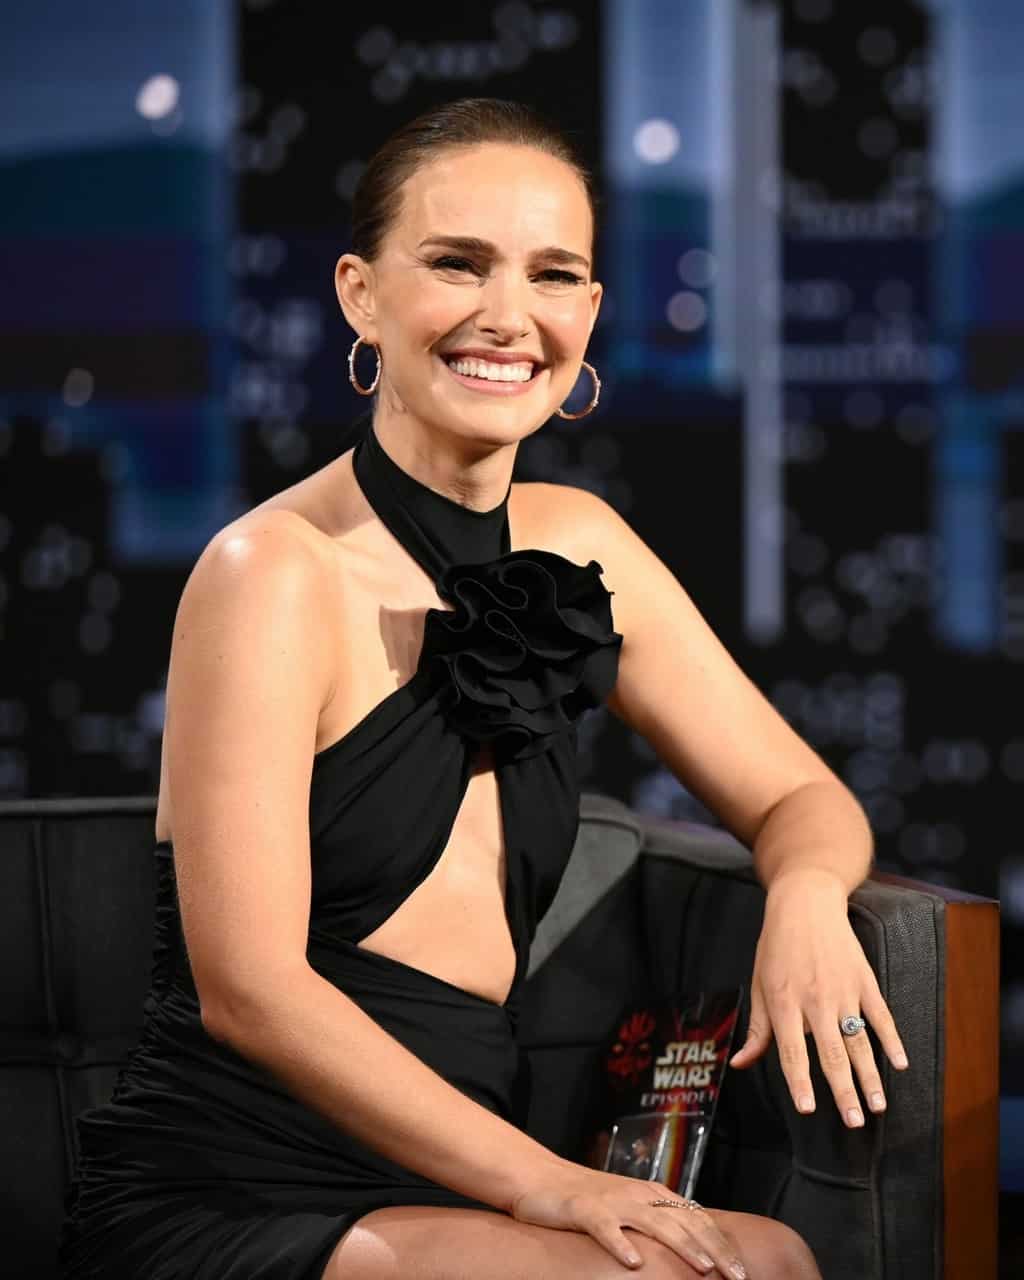 Natalie Portman Puts Her Toned Legs on Display at Jimmy Kimmel Live in LA